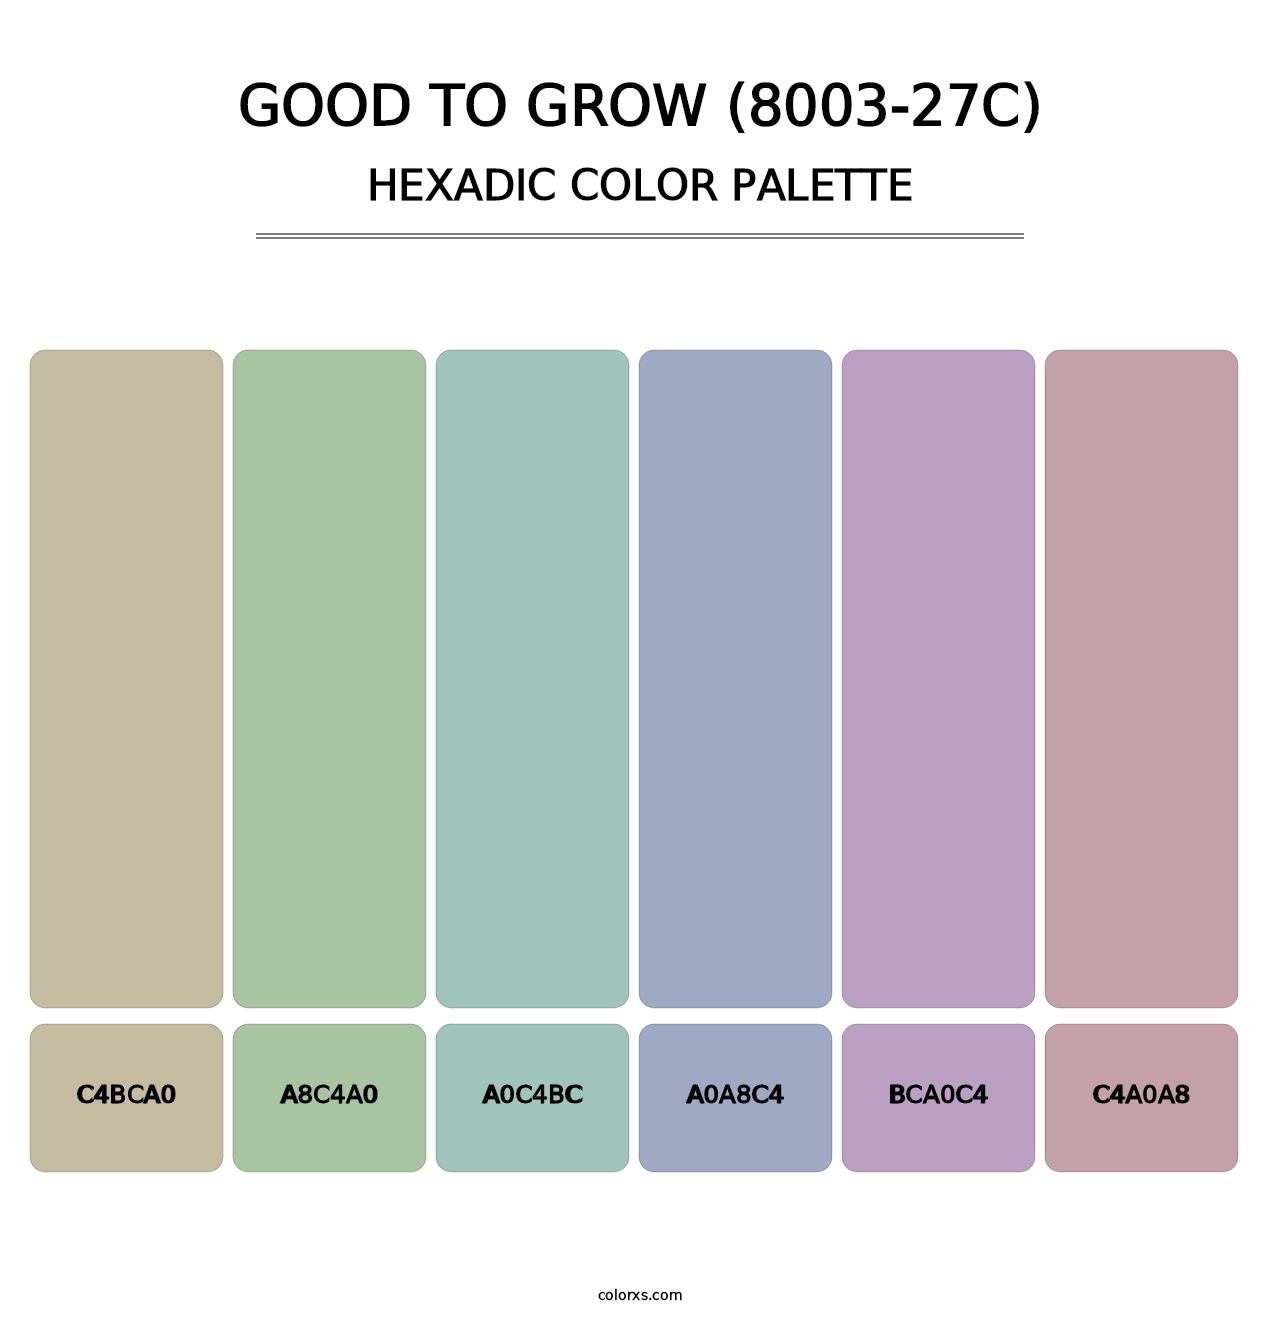 Good to Grow (8003-27C) - Hexadic Color Palette